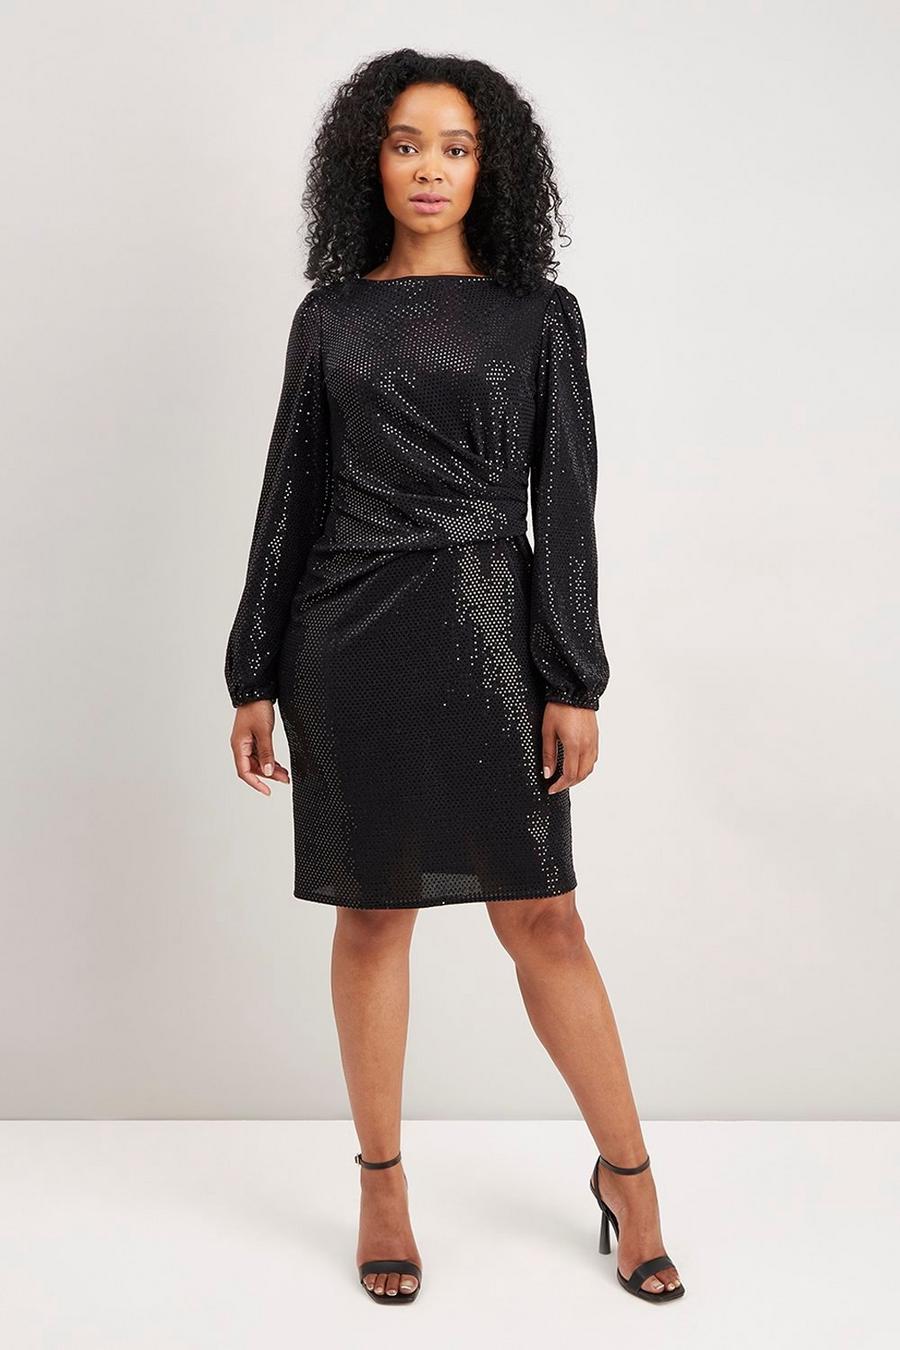 Petite Black Sequin Ruched Side Dress